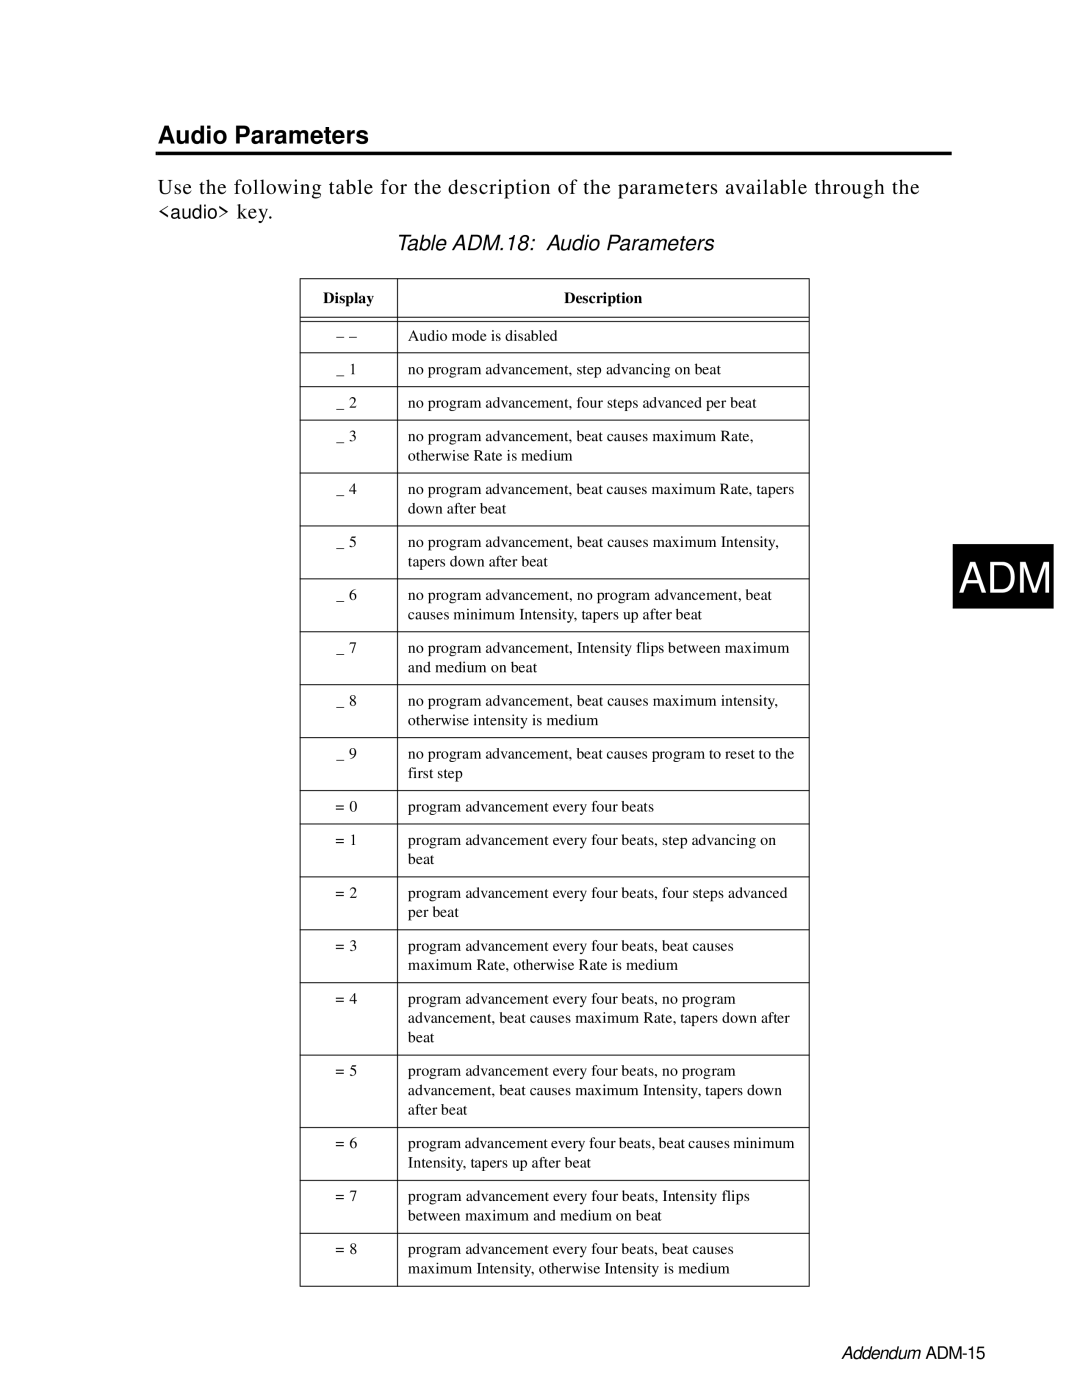 High End Systems AF1000 user manual Table ADM.18 Audio Parameters, Addendum ADM-15, Display, Description 